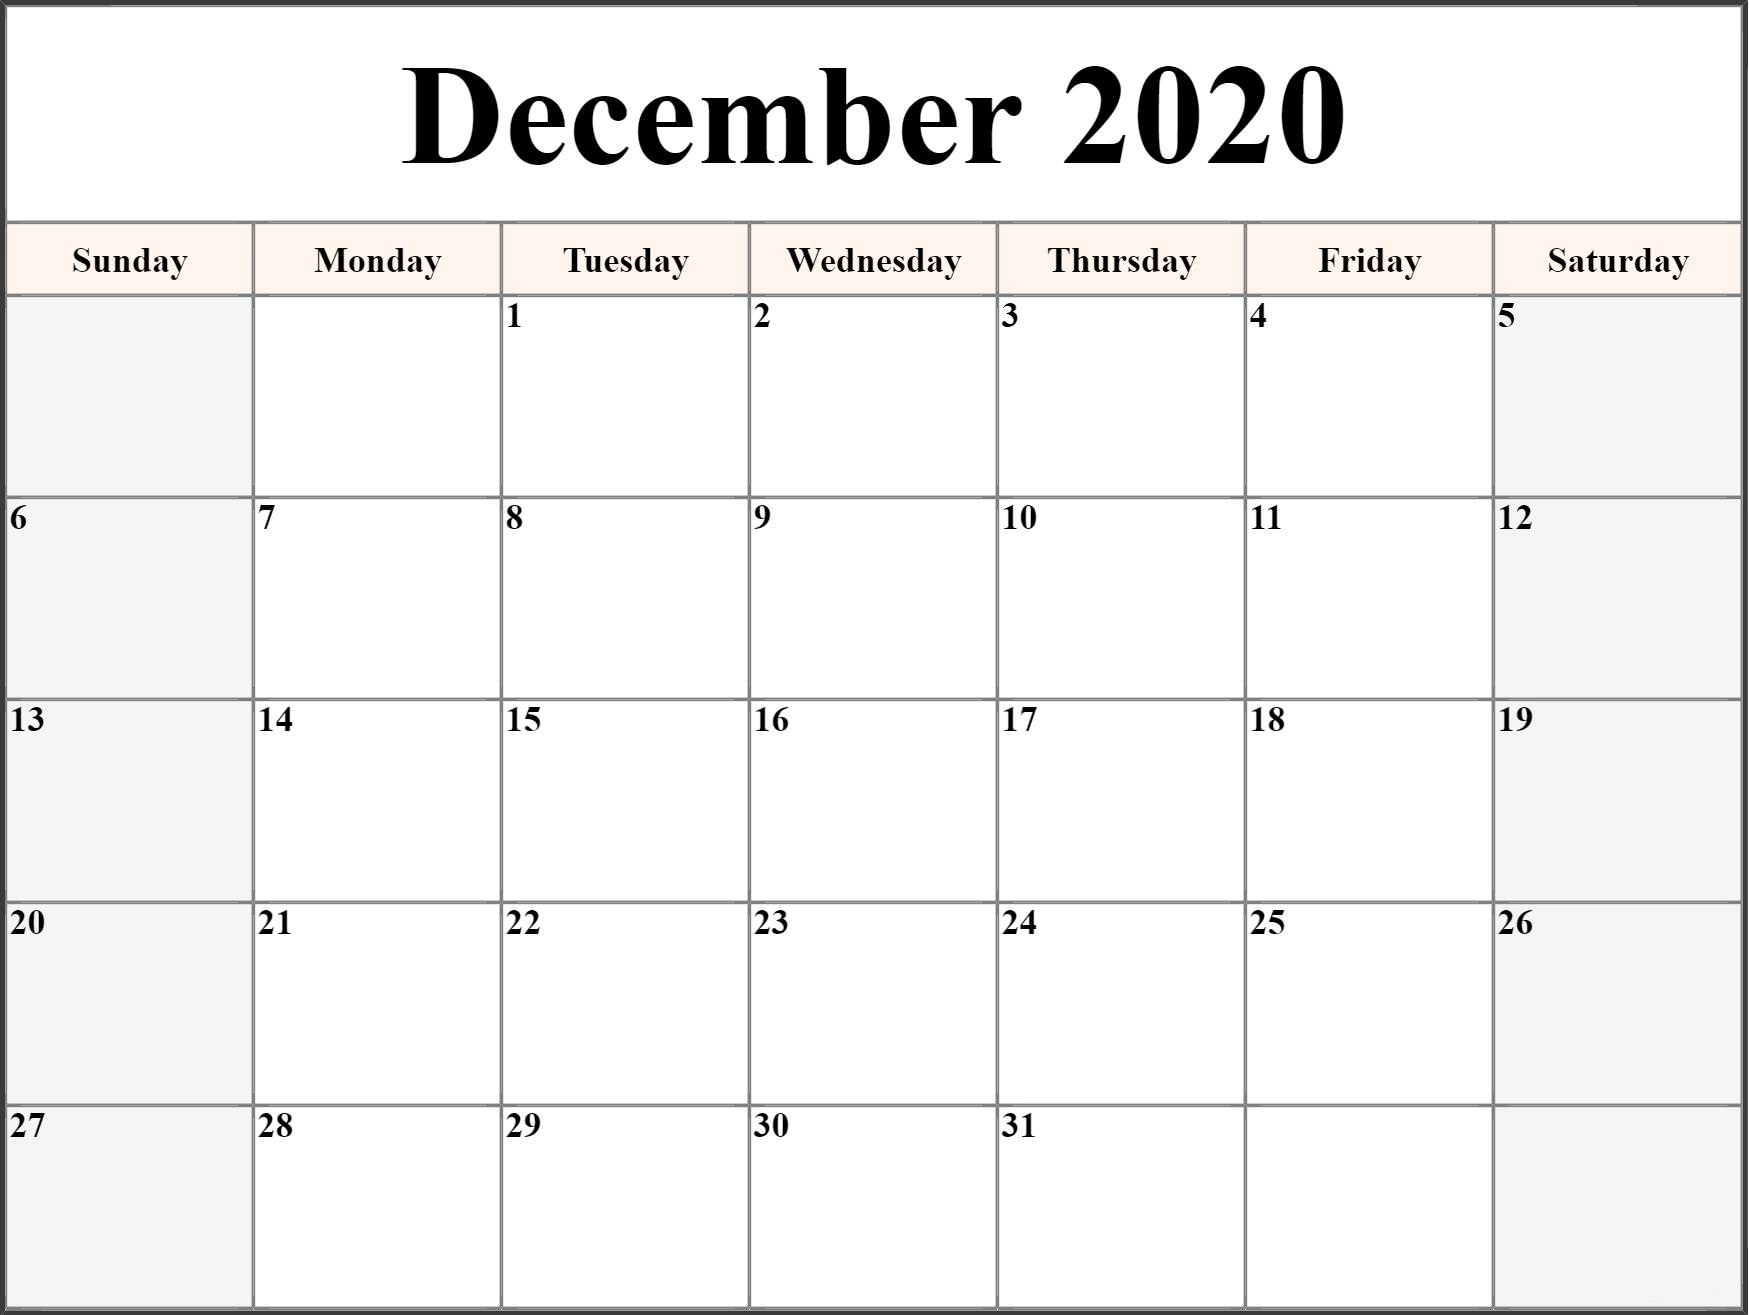 December 2020 Calendar